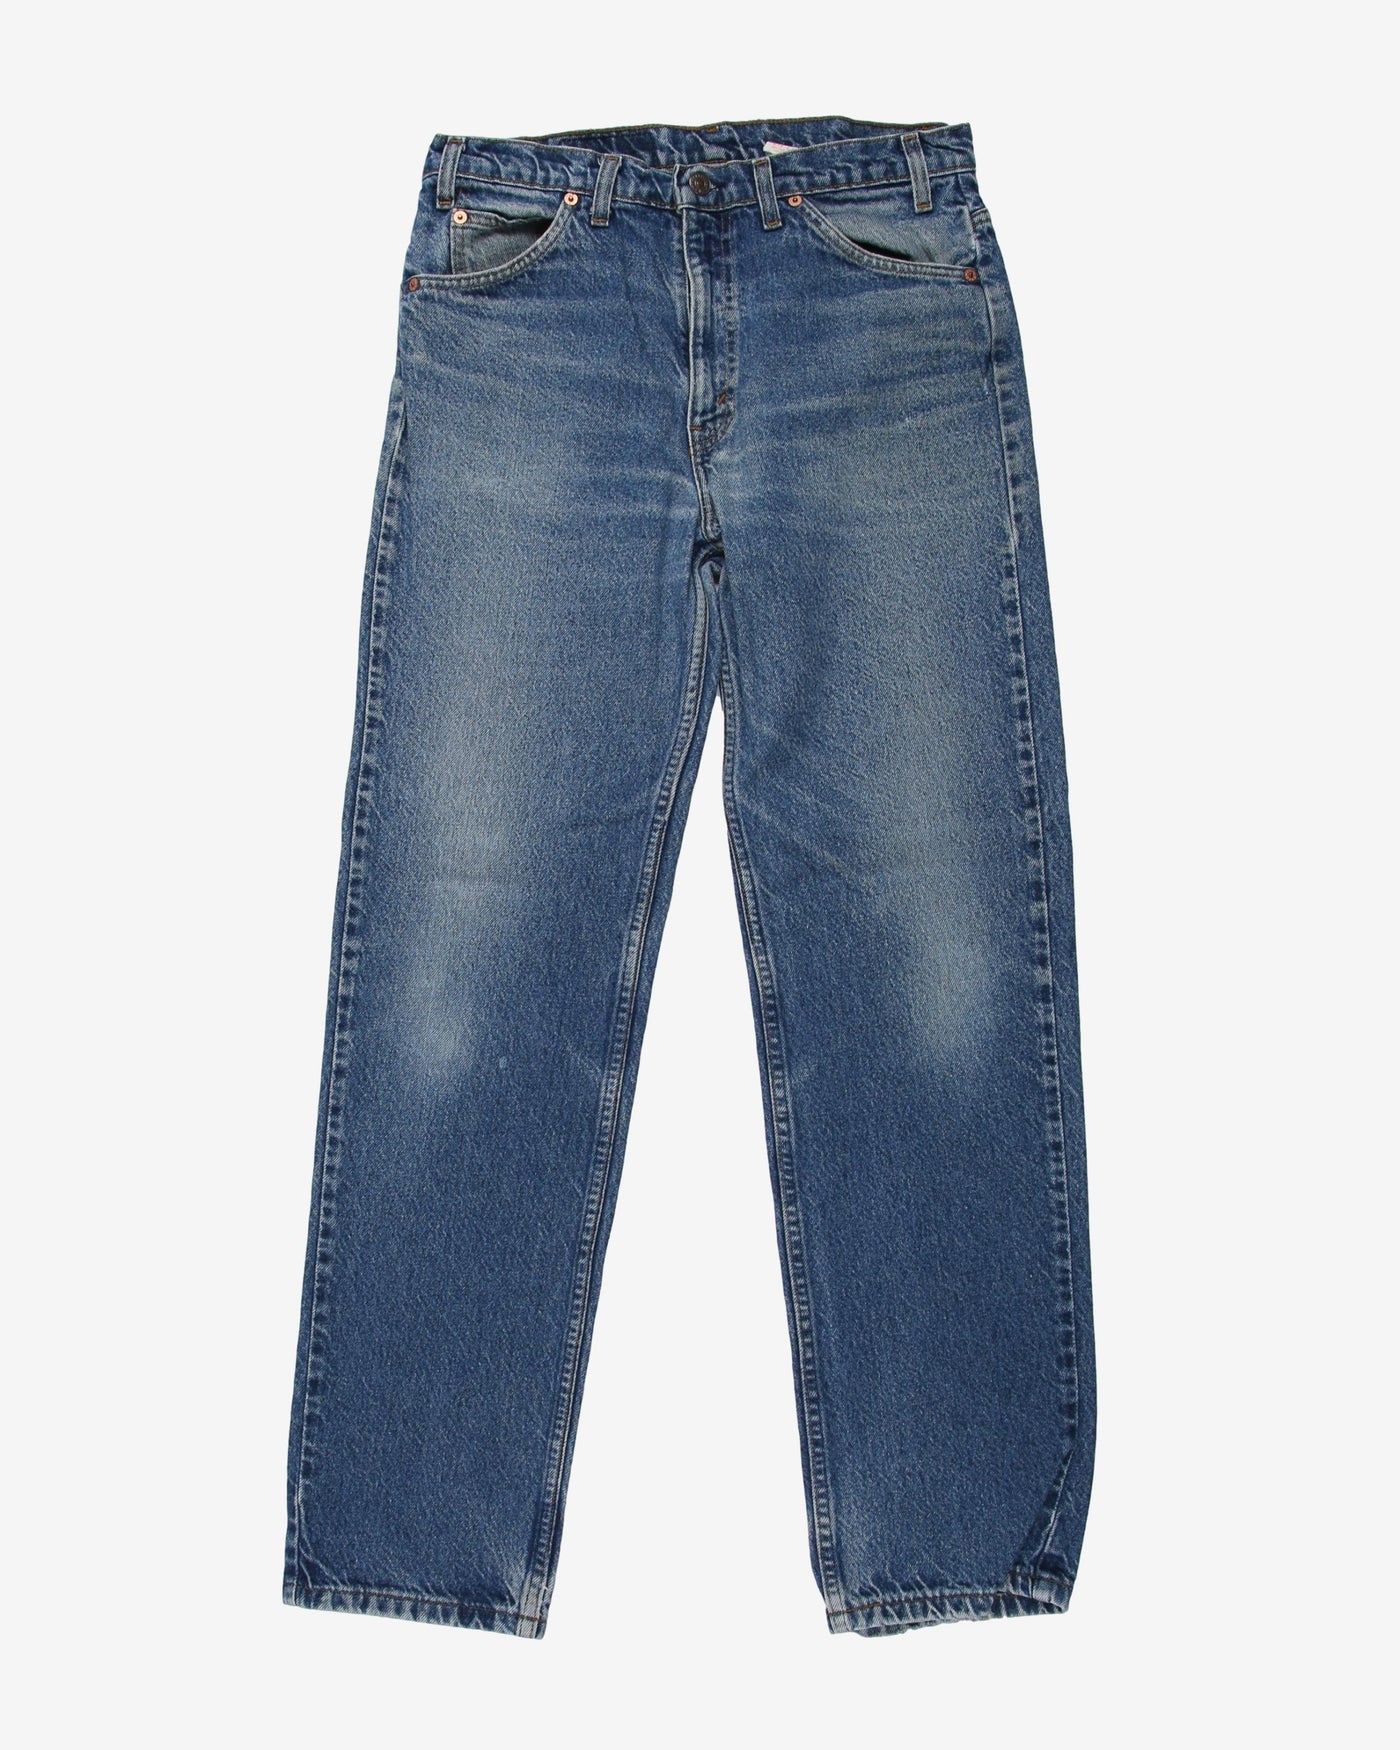 Vintage Levi's 505 Denim Blue Orange Tab Jeans - W32 L30